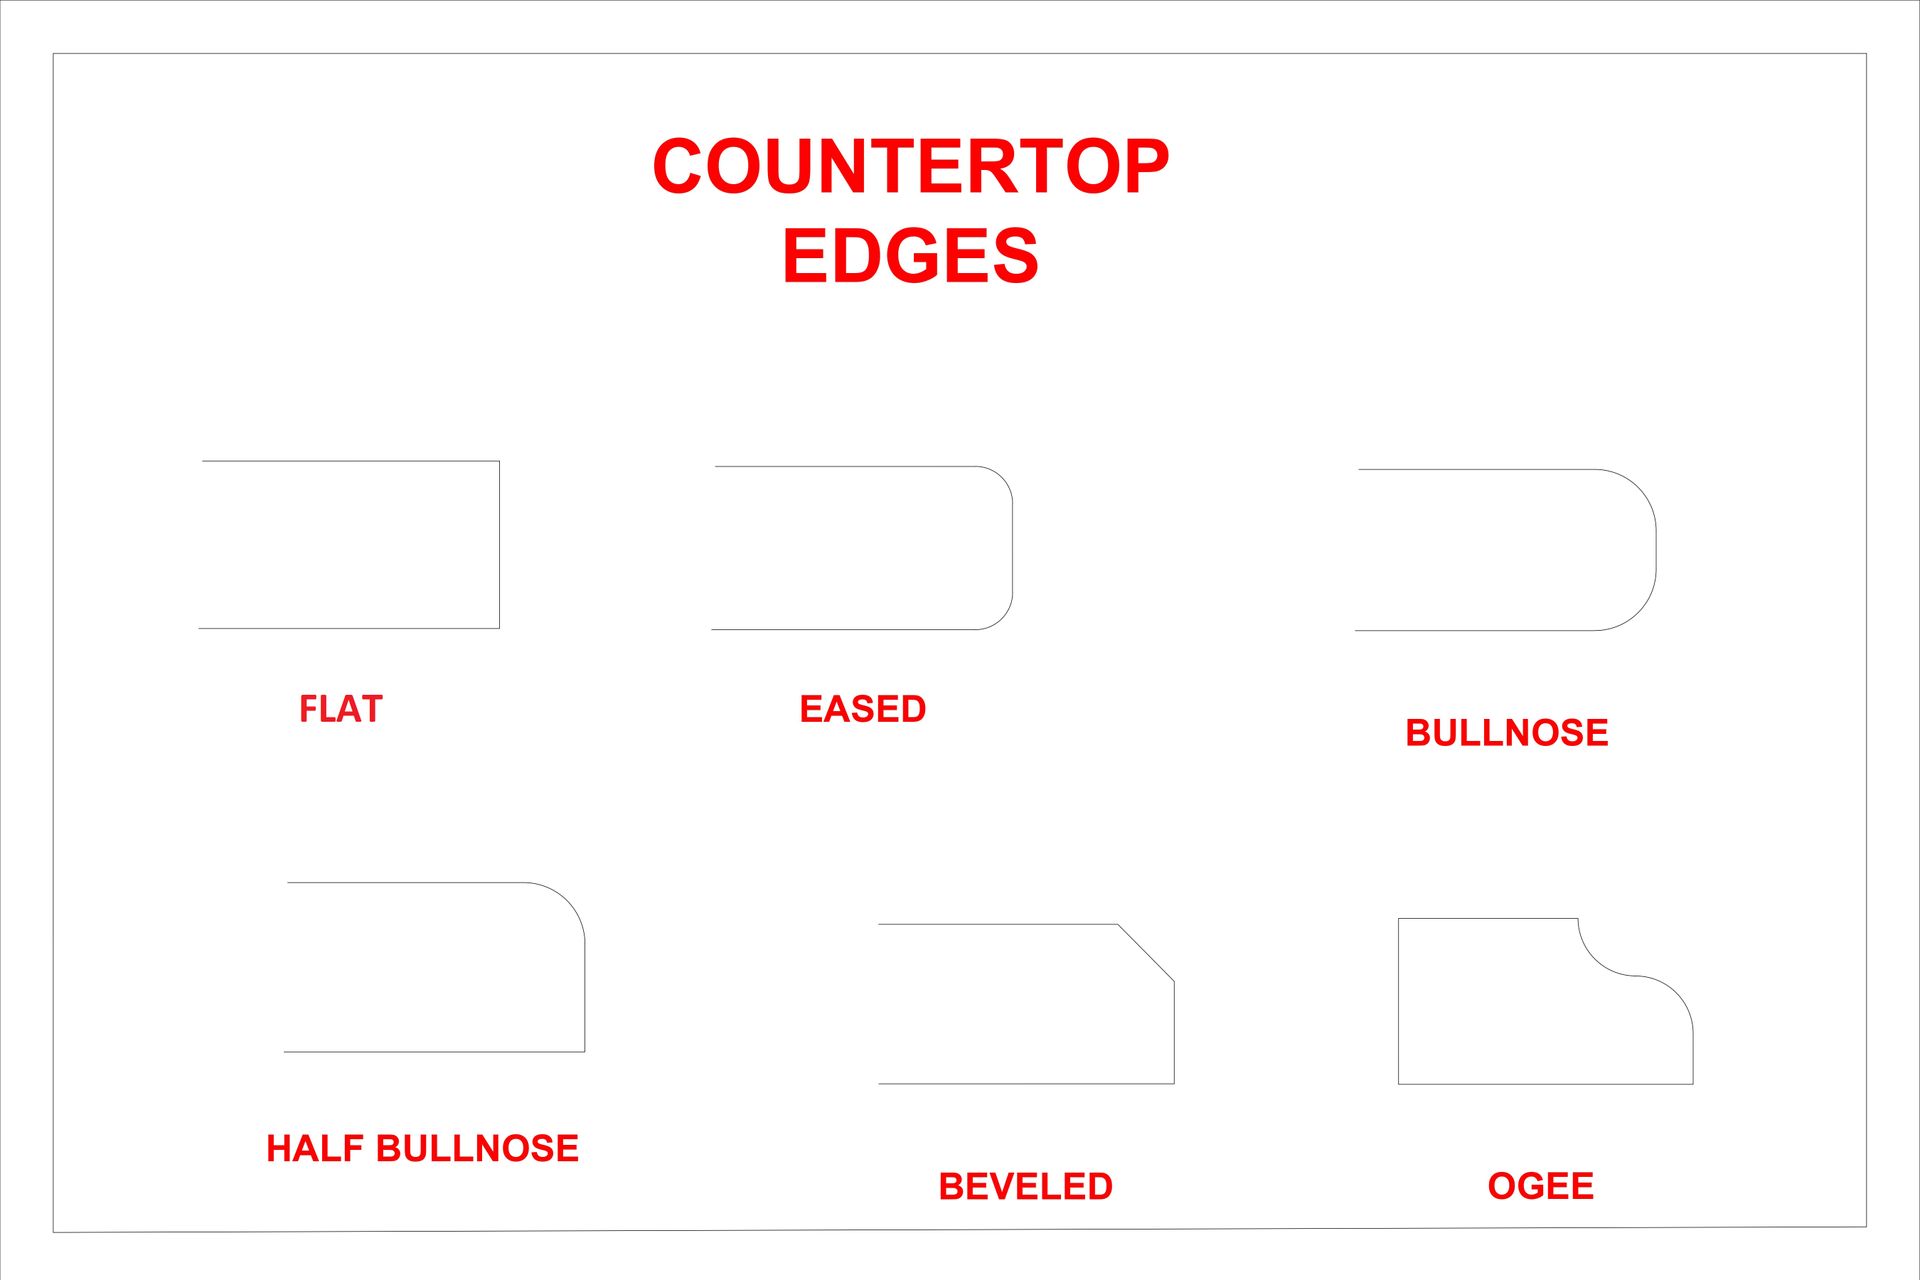 Countertop edges